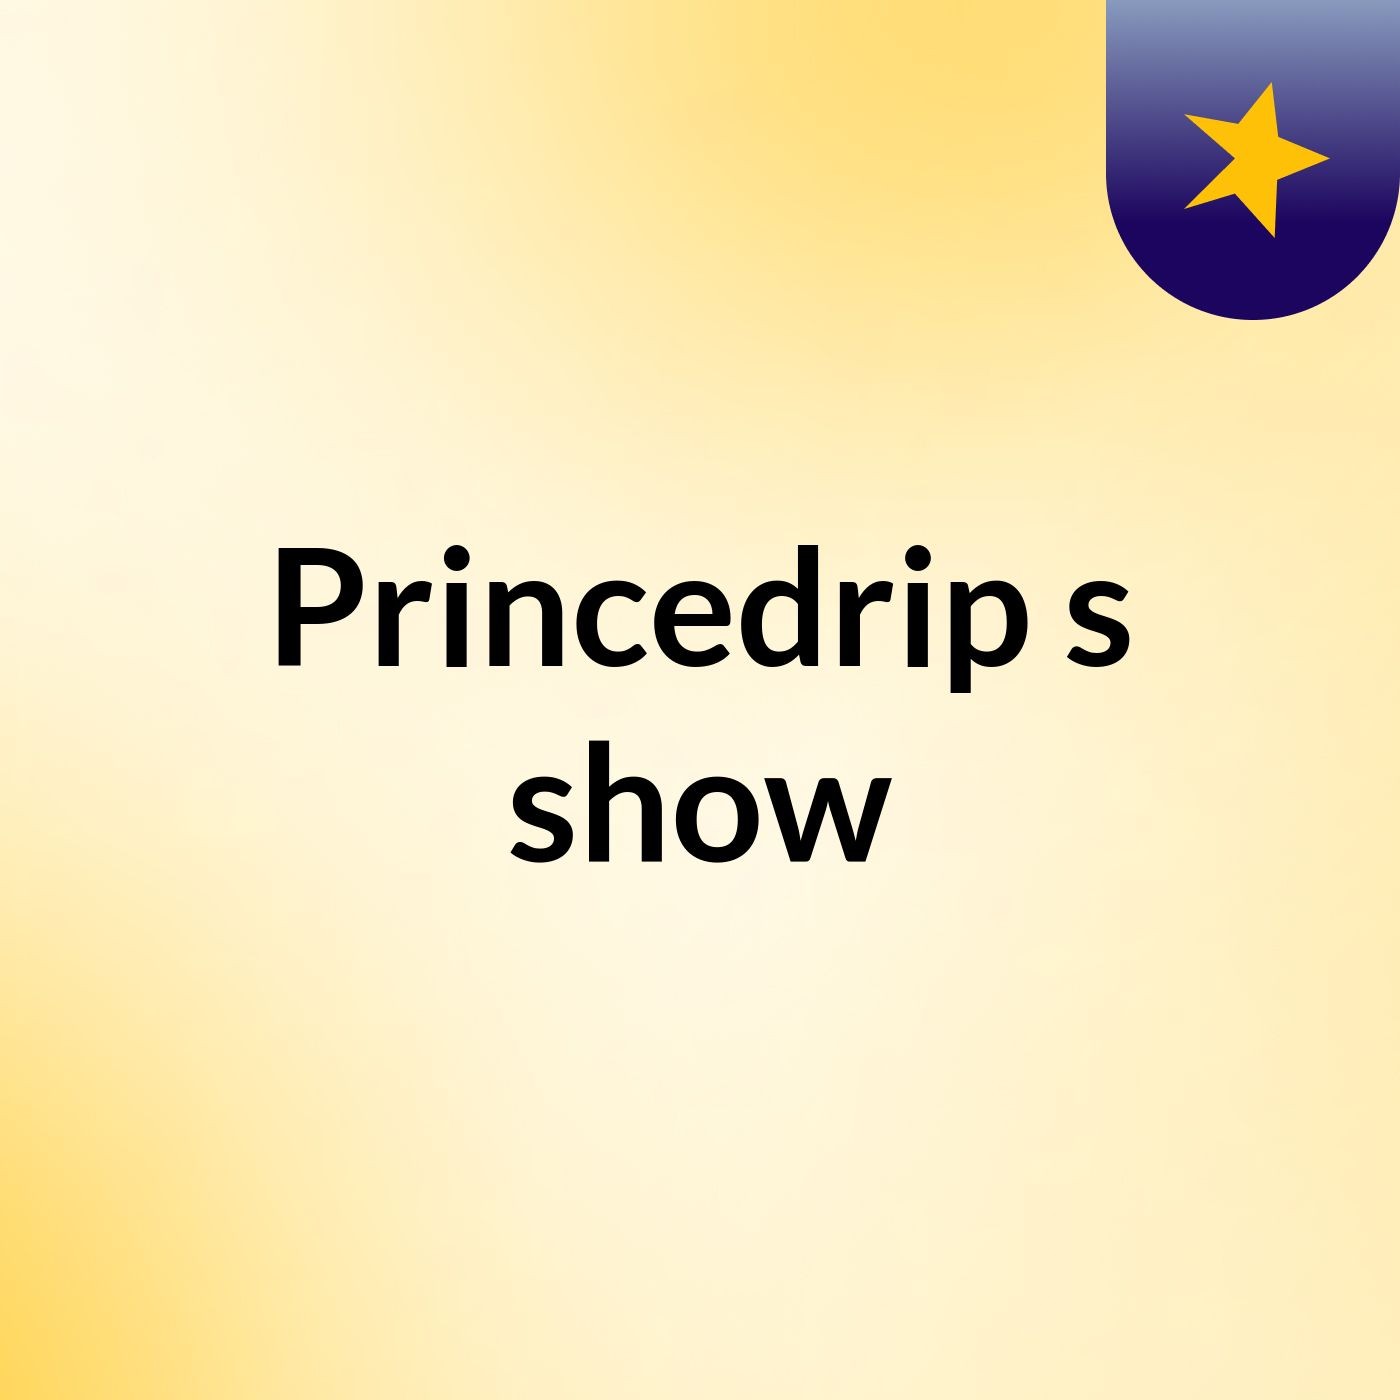 Princedrip's show